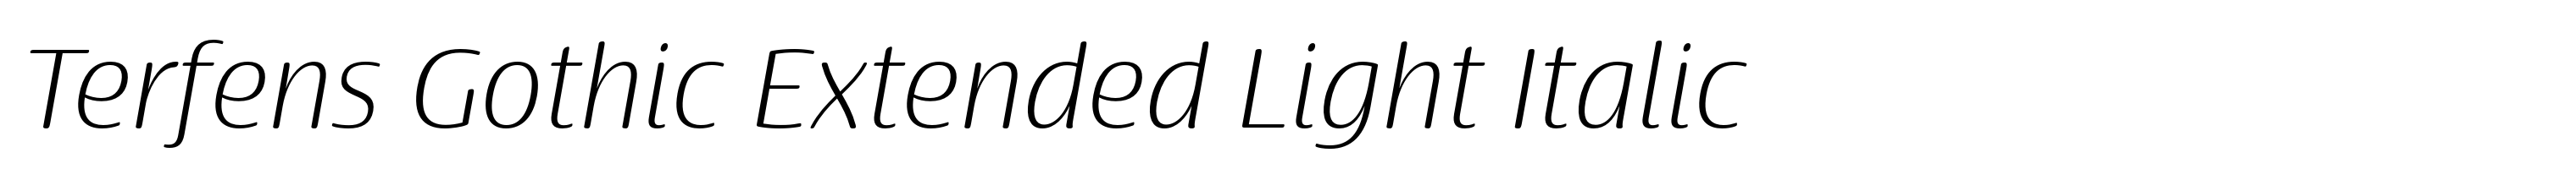 Terfens Gothic Extended Light Italic